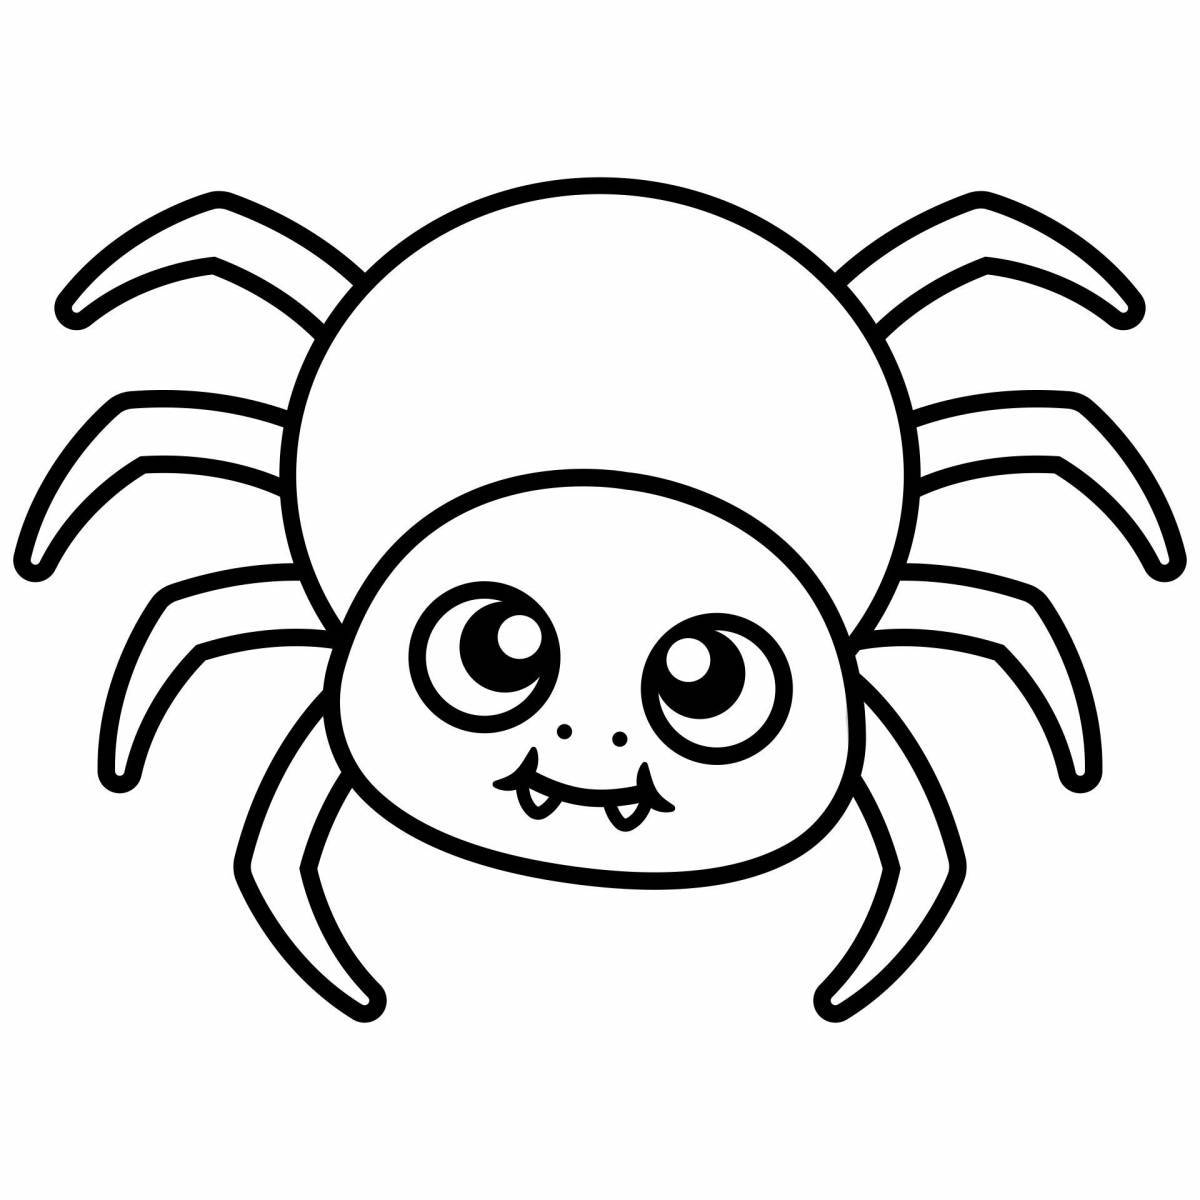 Spider for kids #8